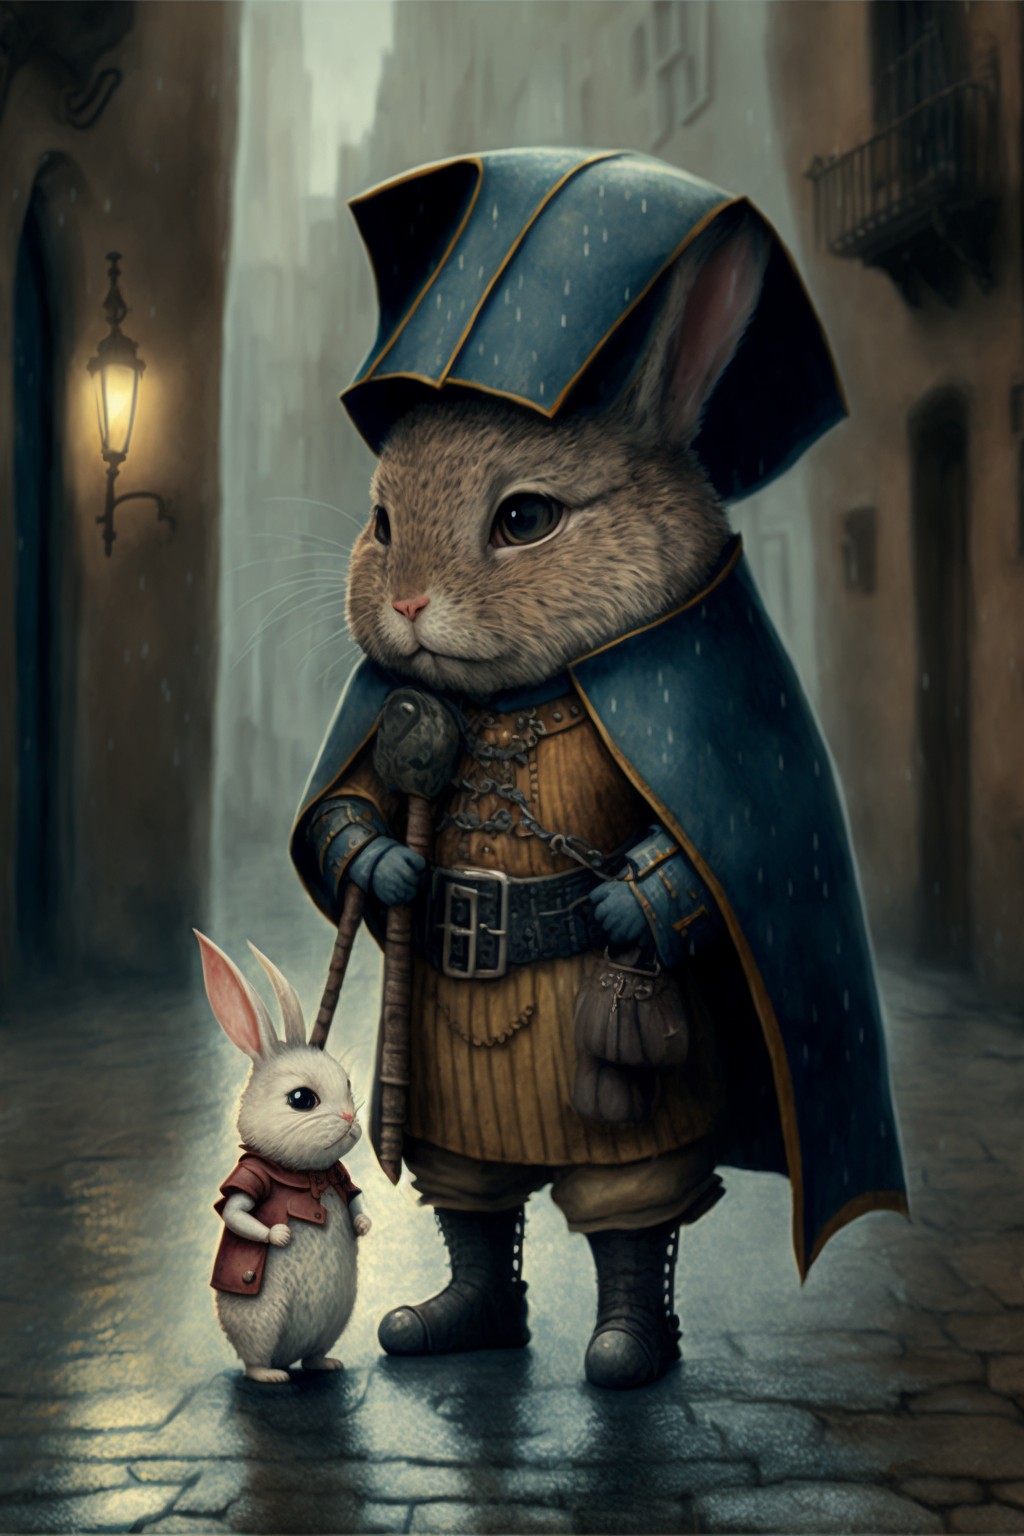 Mother Rabbit Helps Little Rabbit with an Umbrella